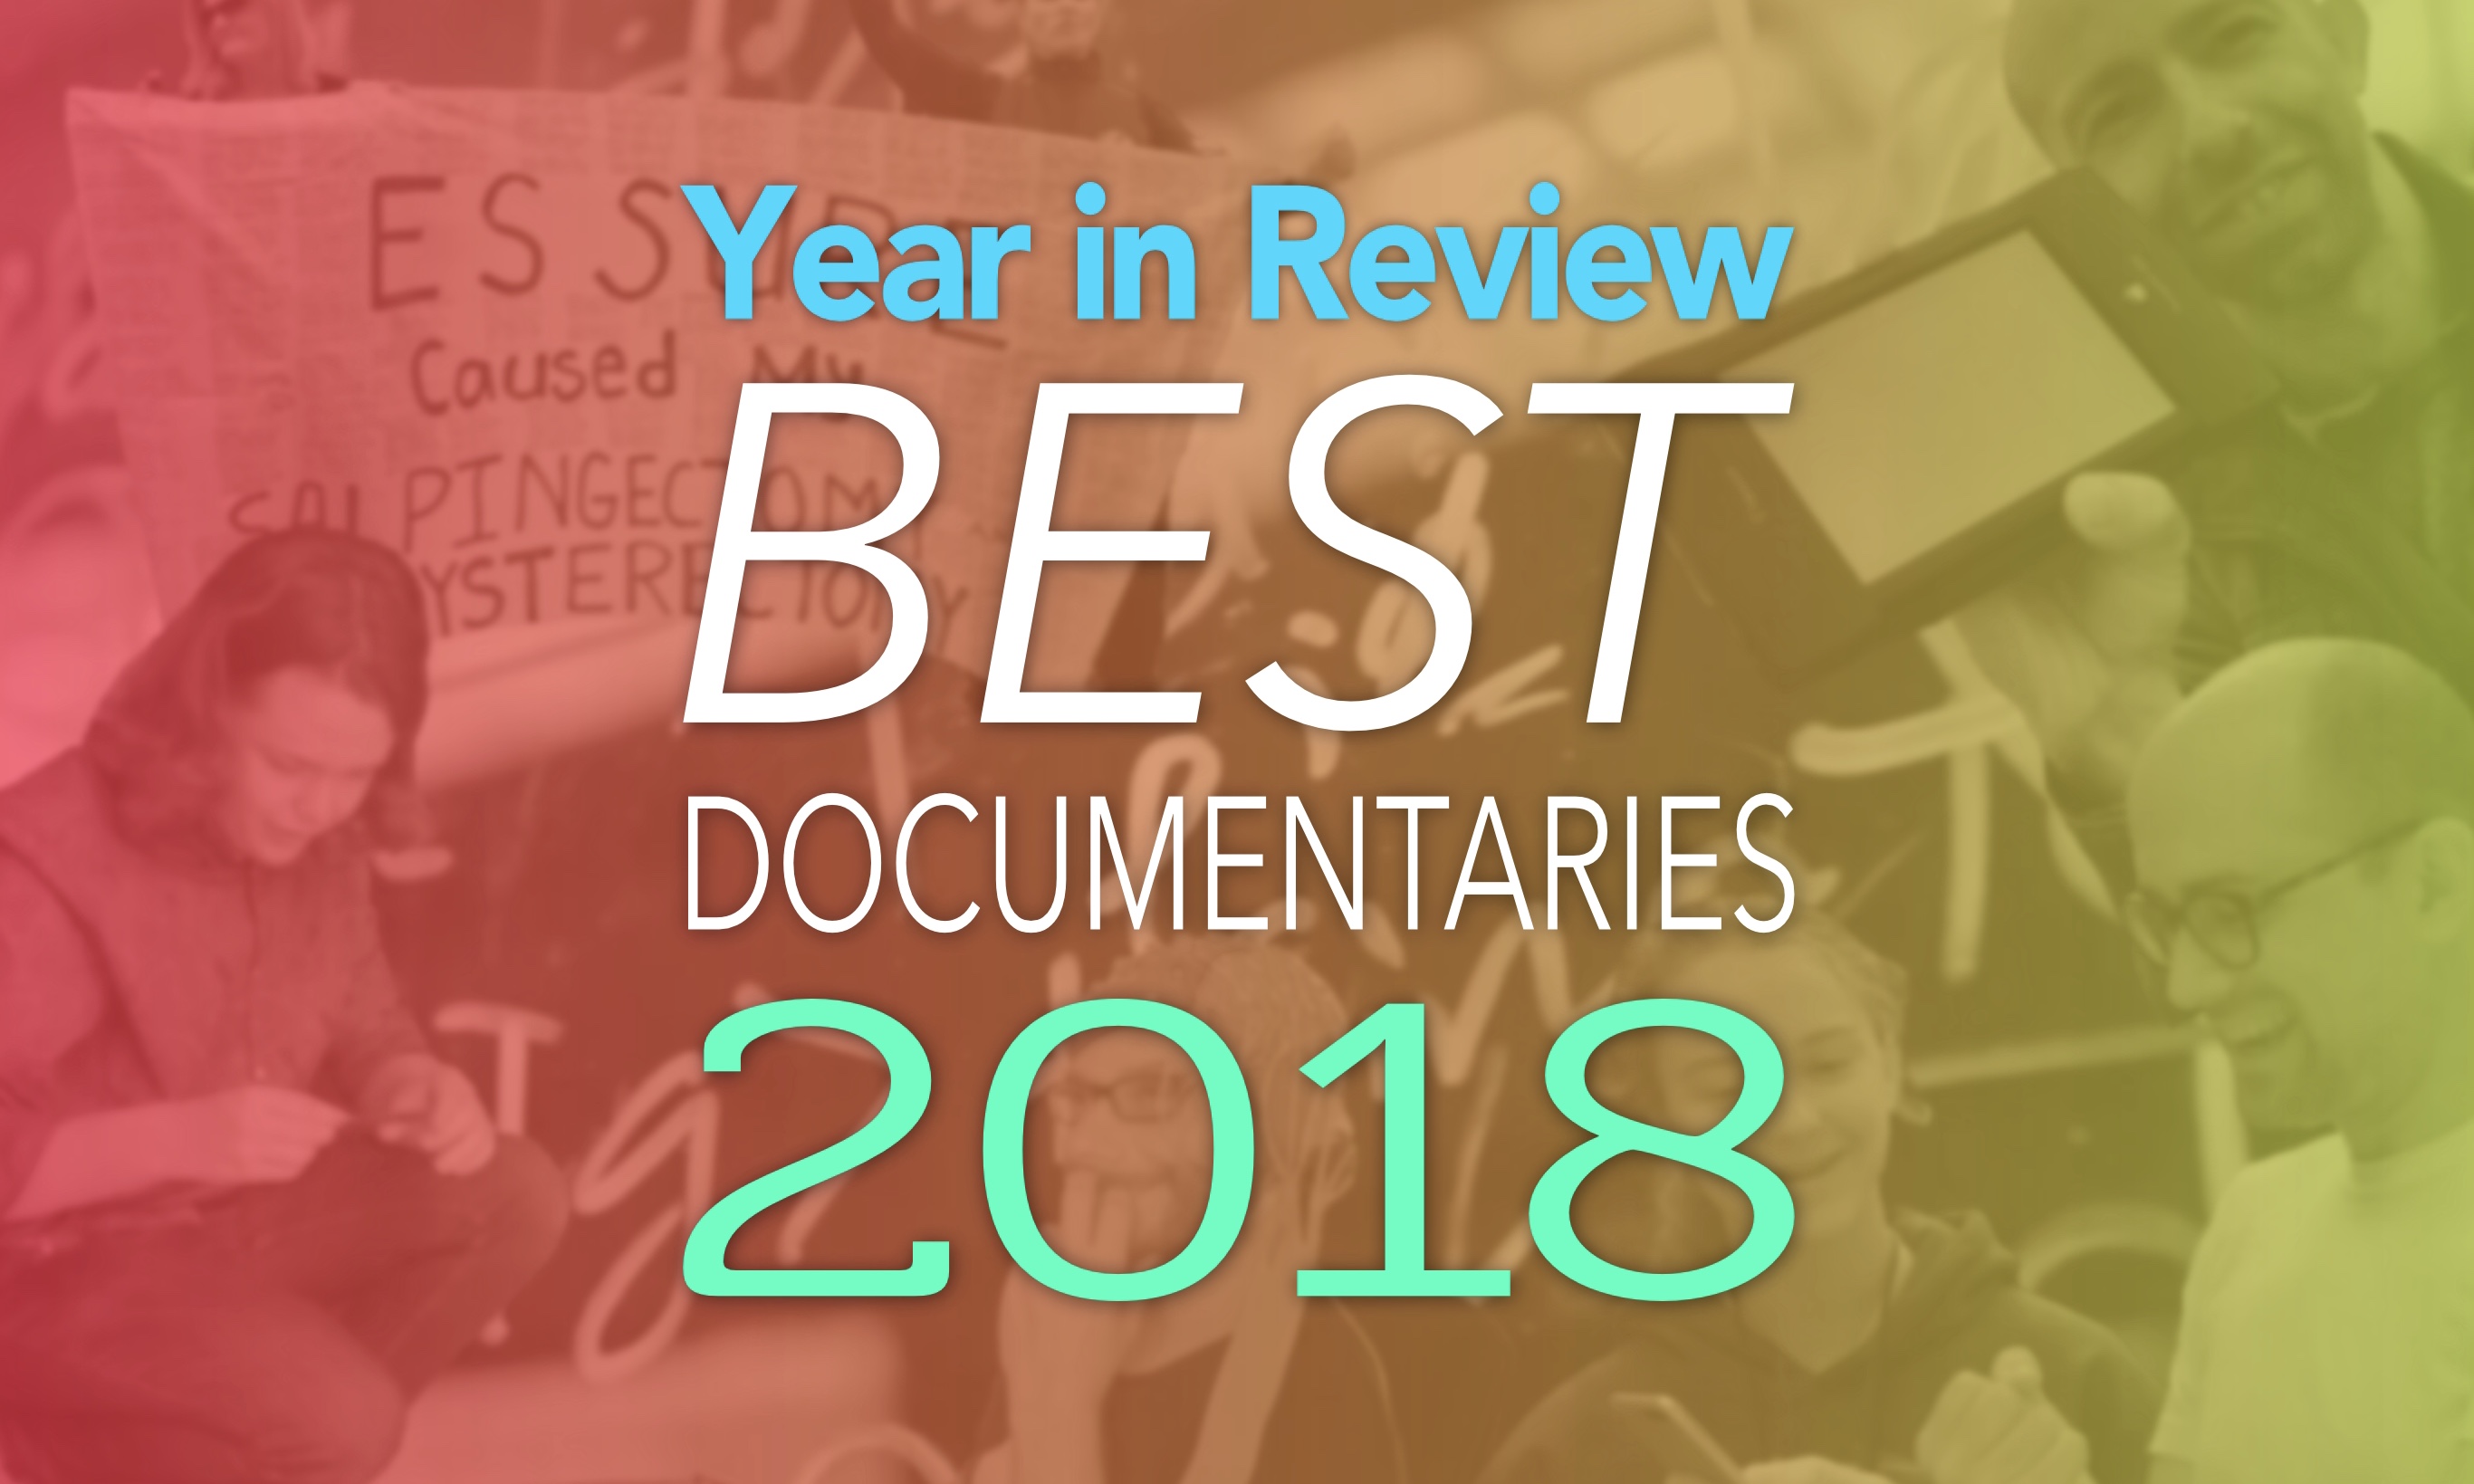 Year in Review Best Documentaries 2018